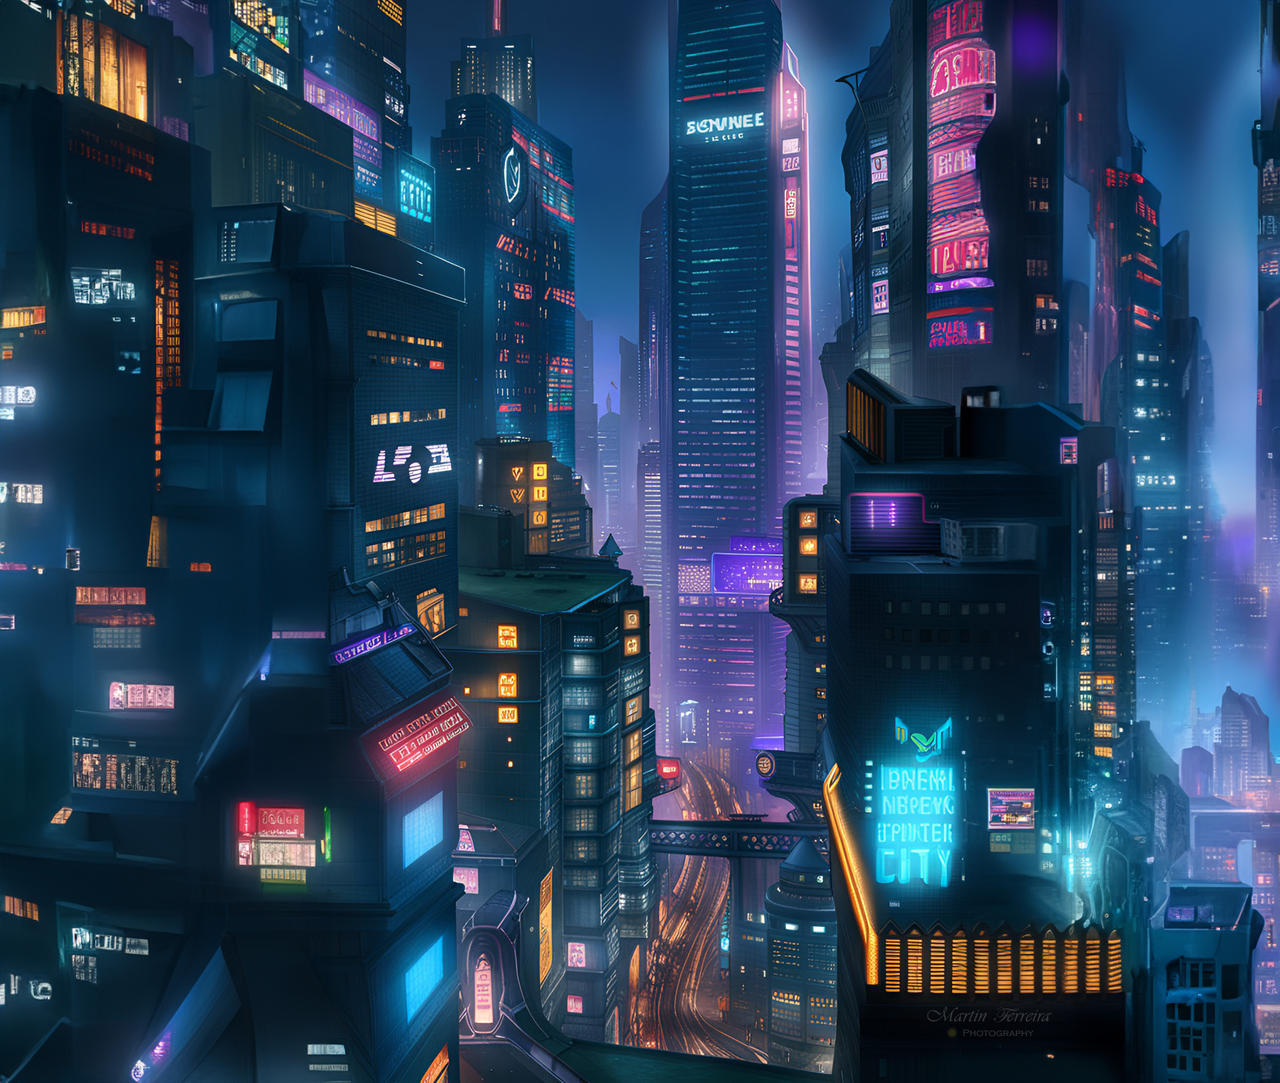 Cyberpunk City by NitramX on DeviantArt